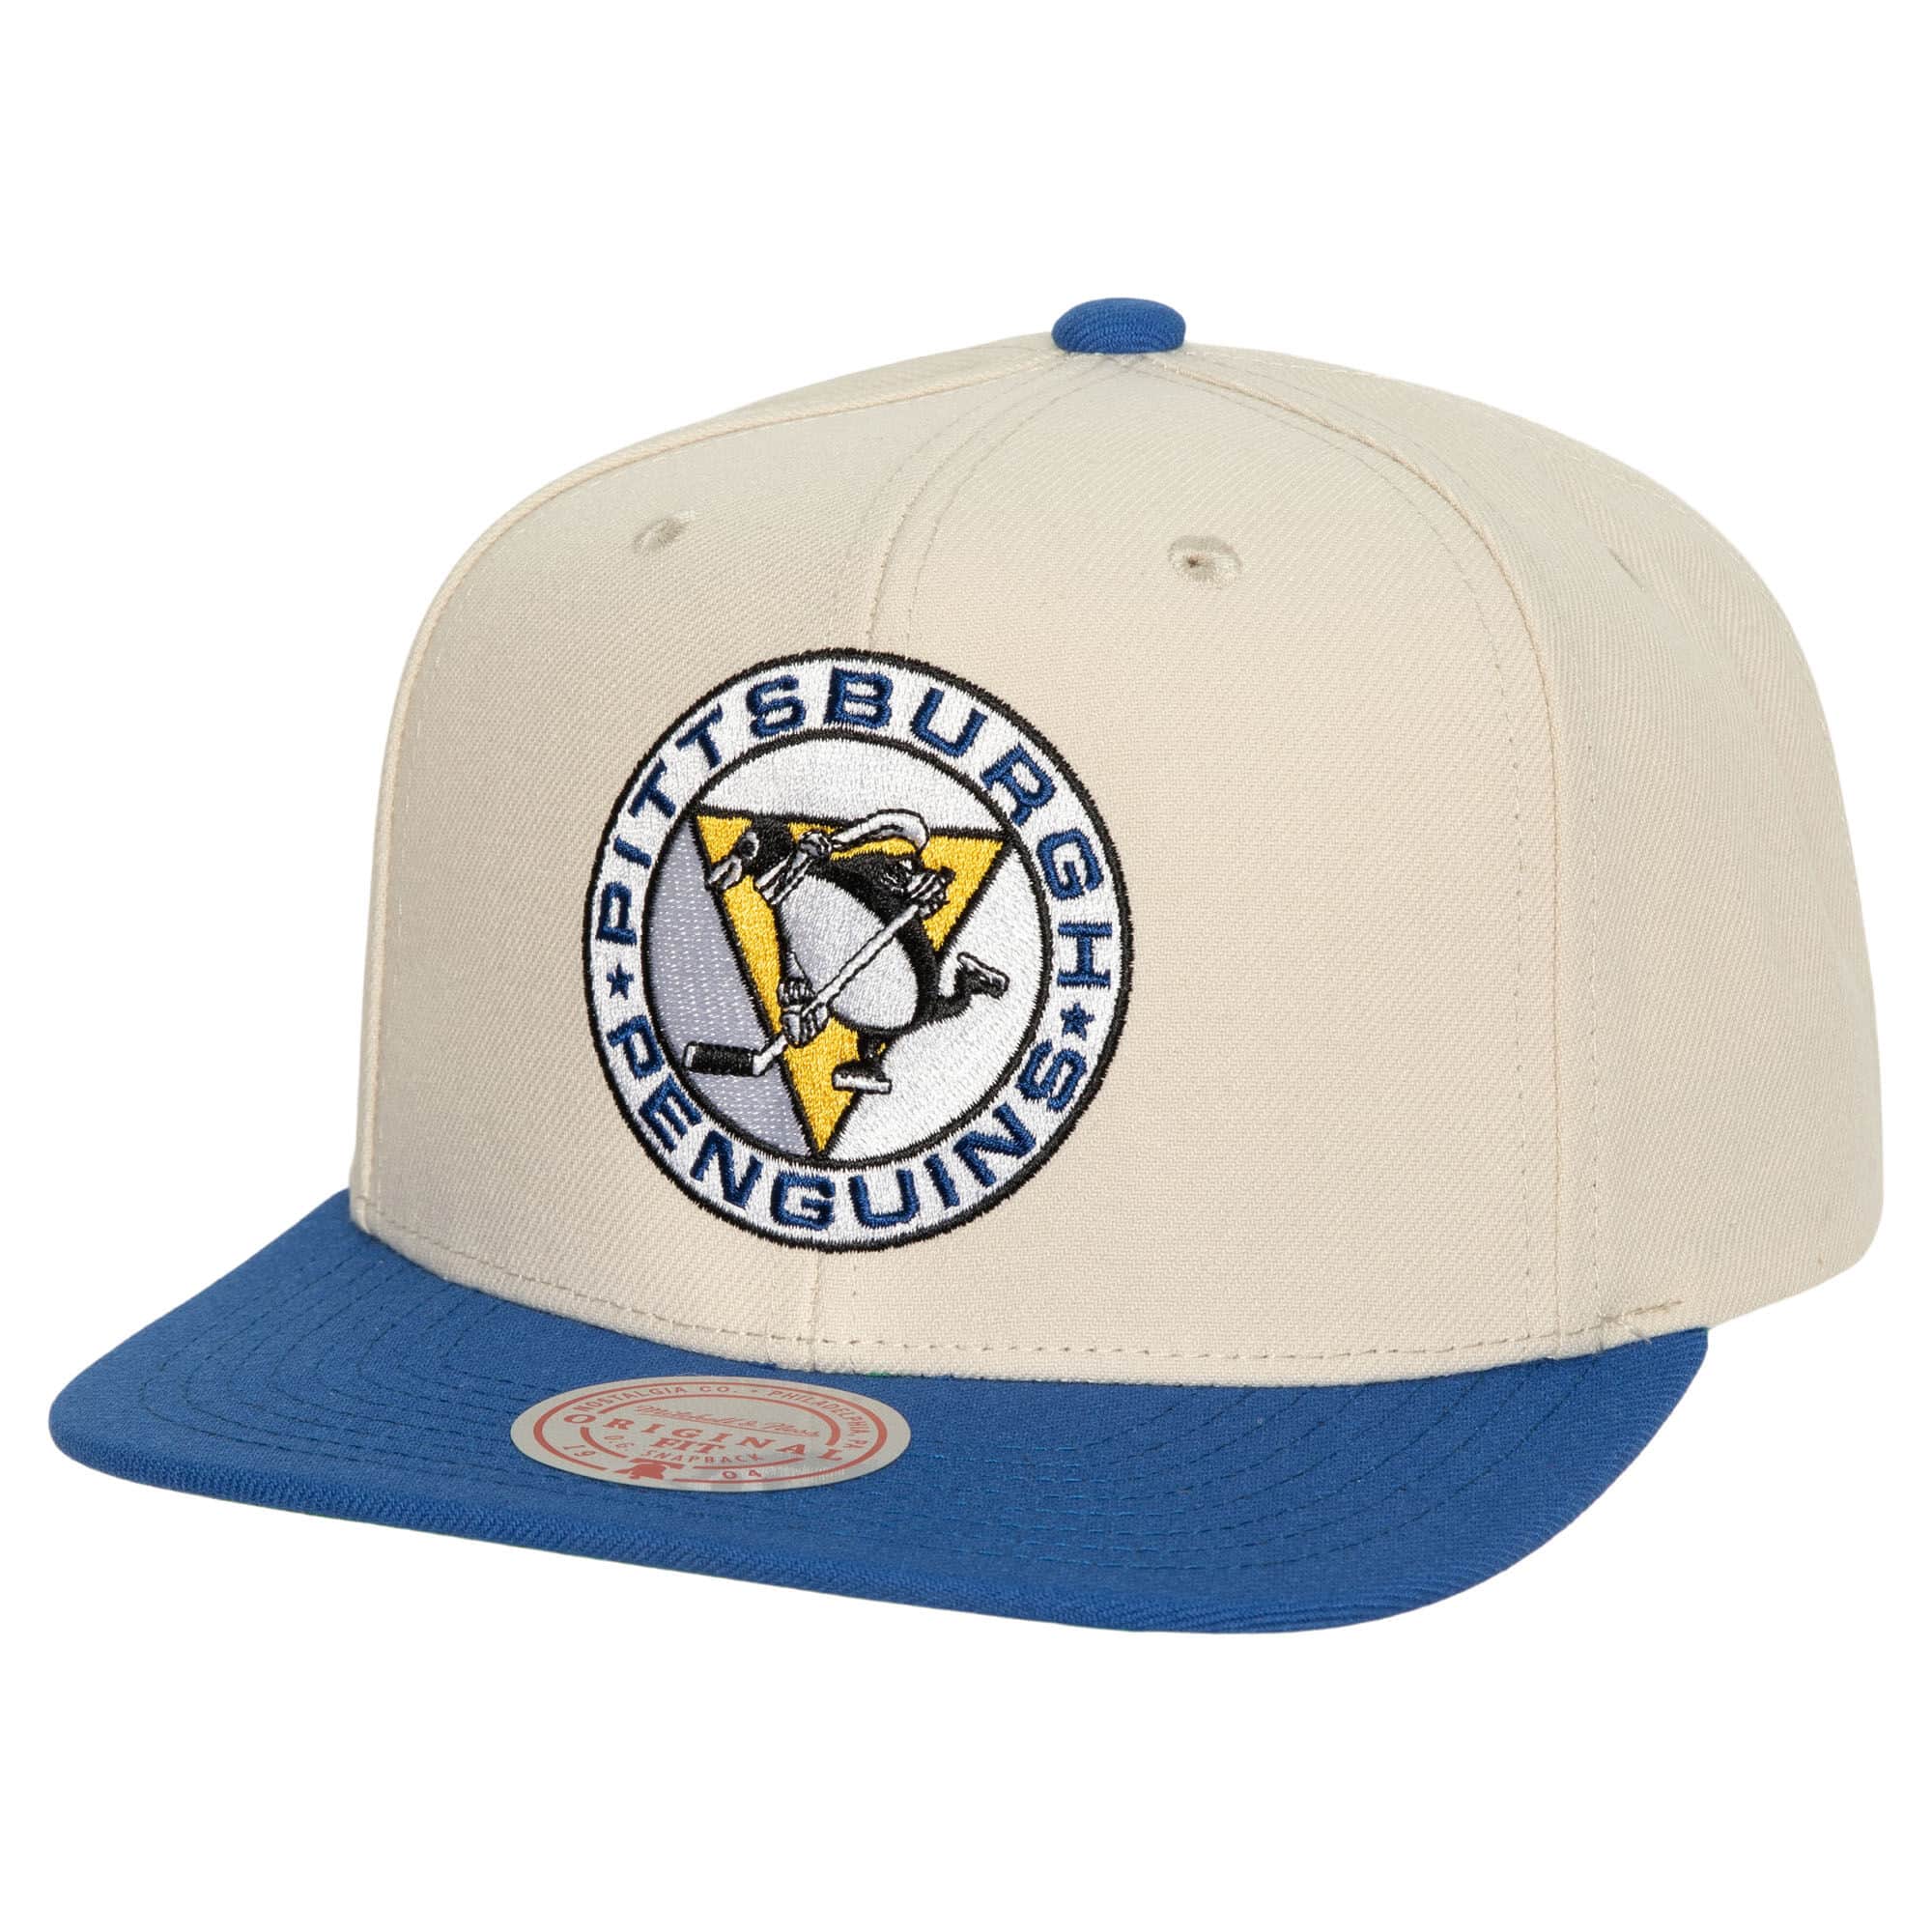 Pittsburgh penguins Adidas NHL SnapBack hat